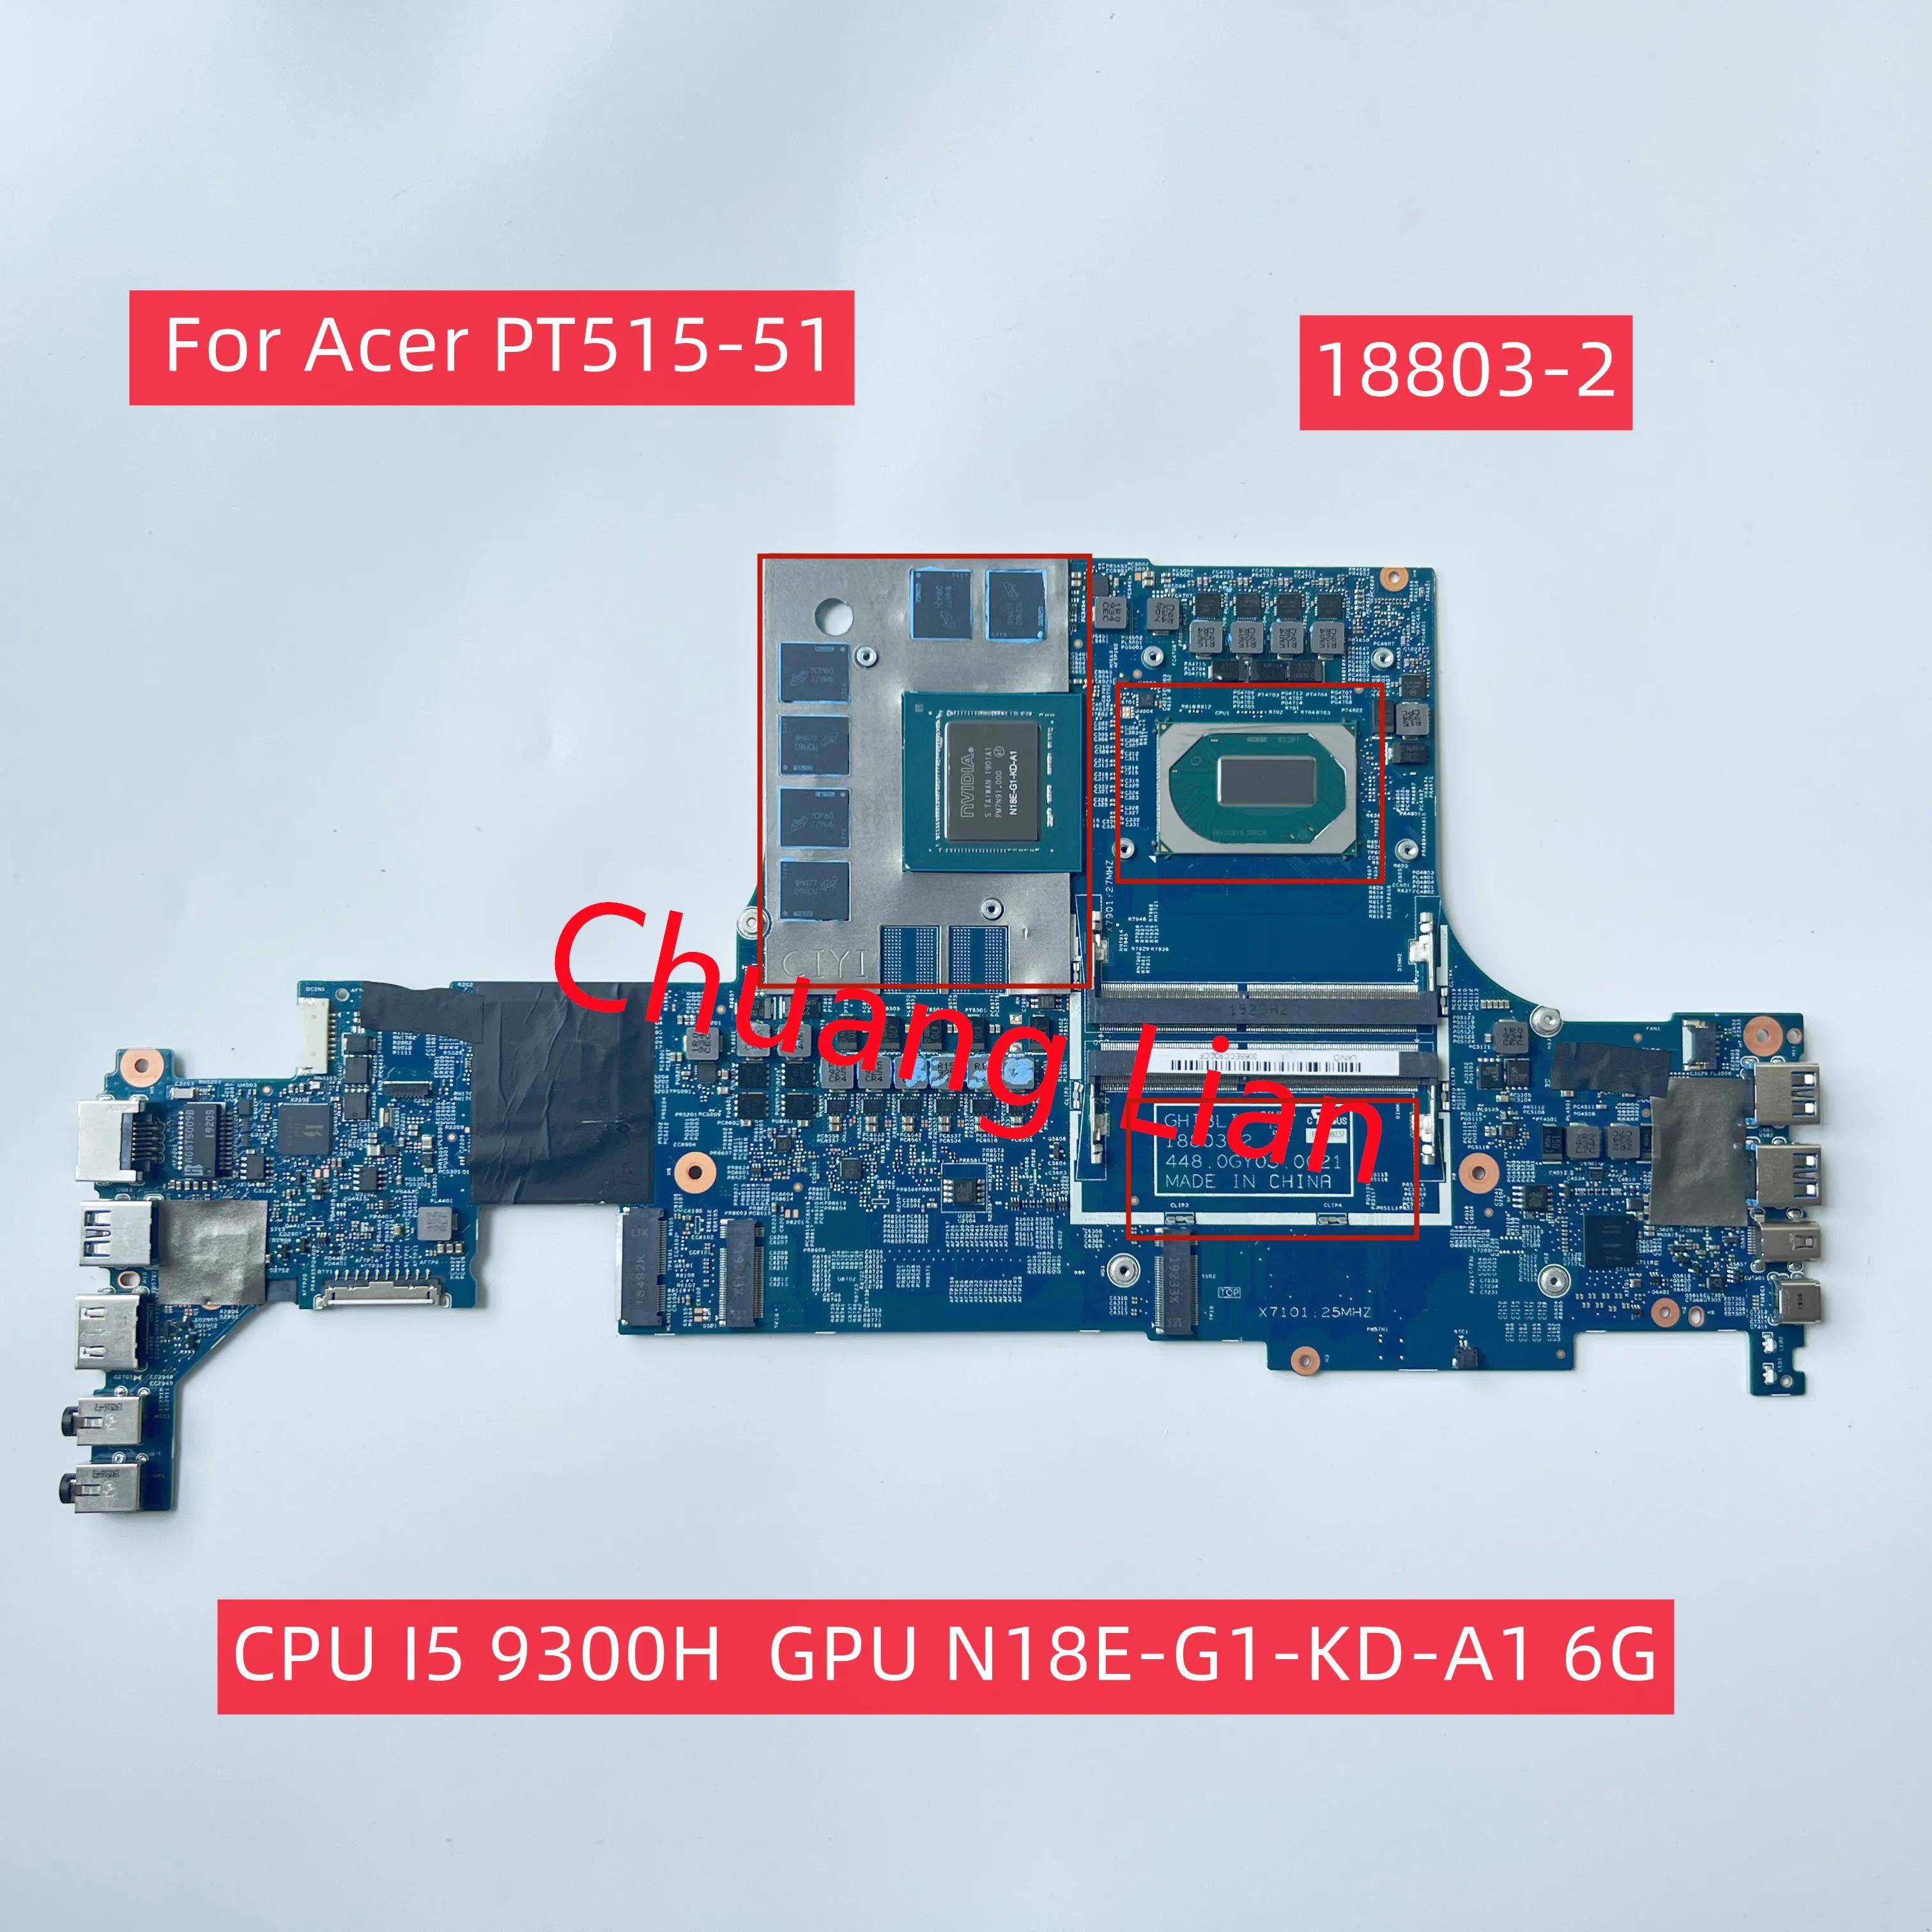 ̼ PT515-51 Ʈ  κ, CPU I5 9300H GPU GTX2060 N18E-G1-KD-A1 6G DDR4, 100%  ׽Ʈ Ϸ, 18803-2